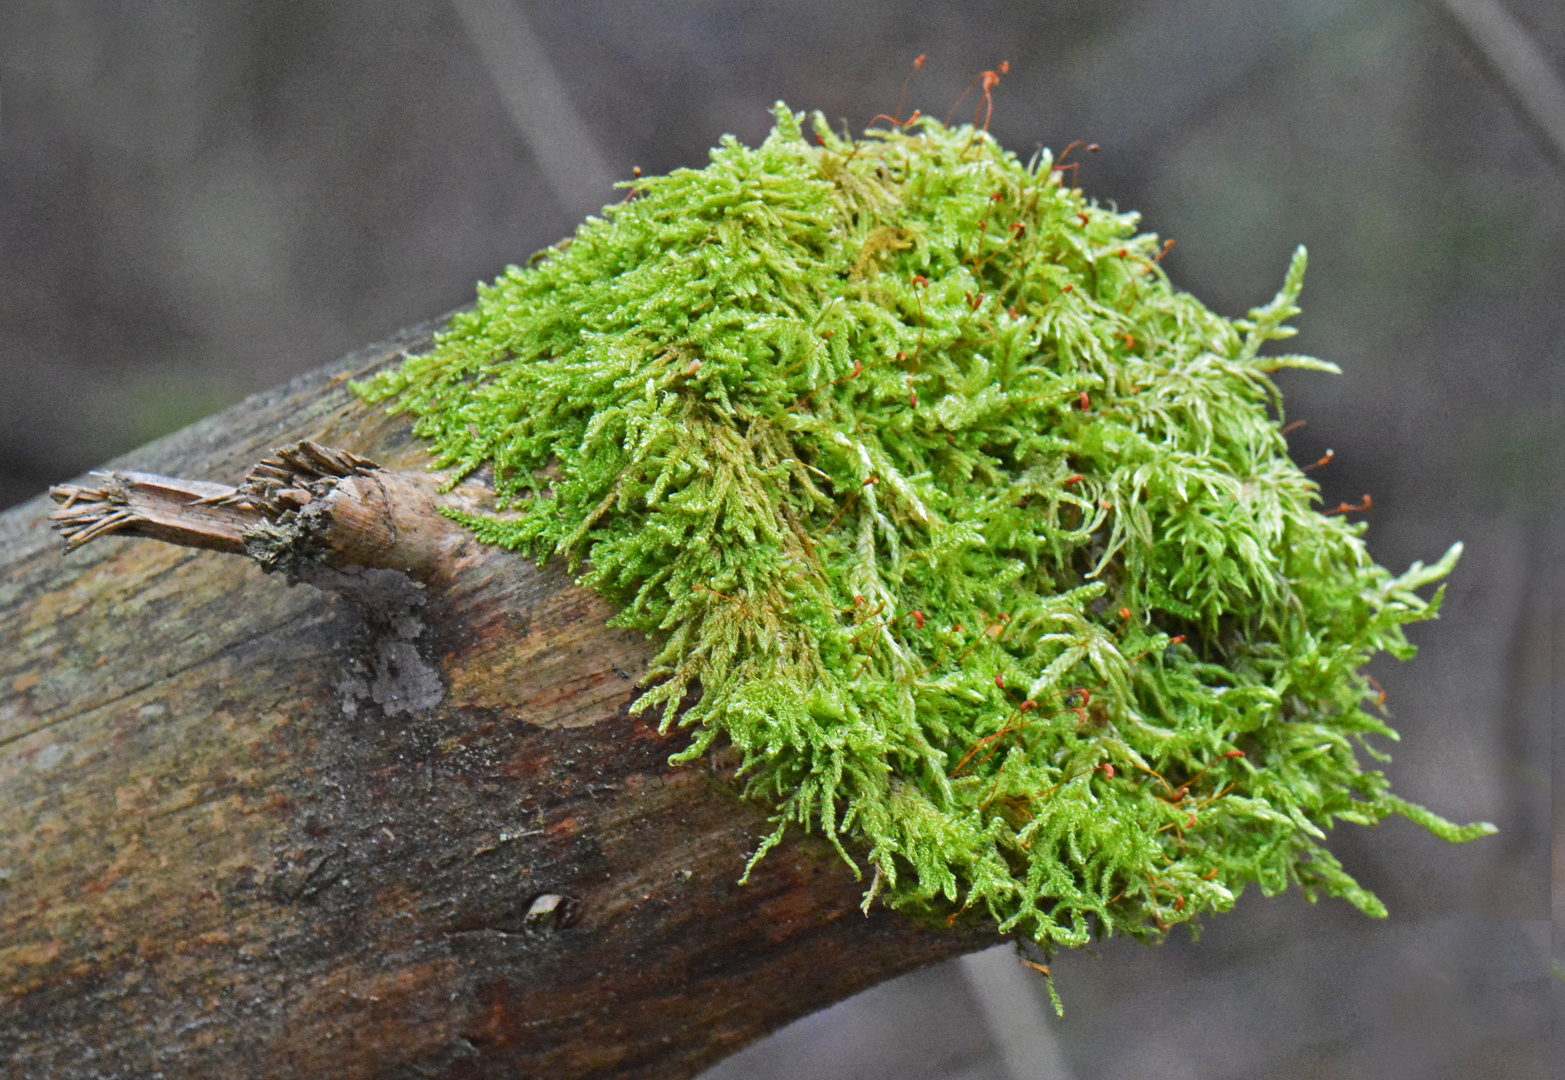 The moss on stub